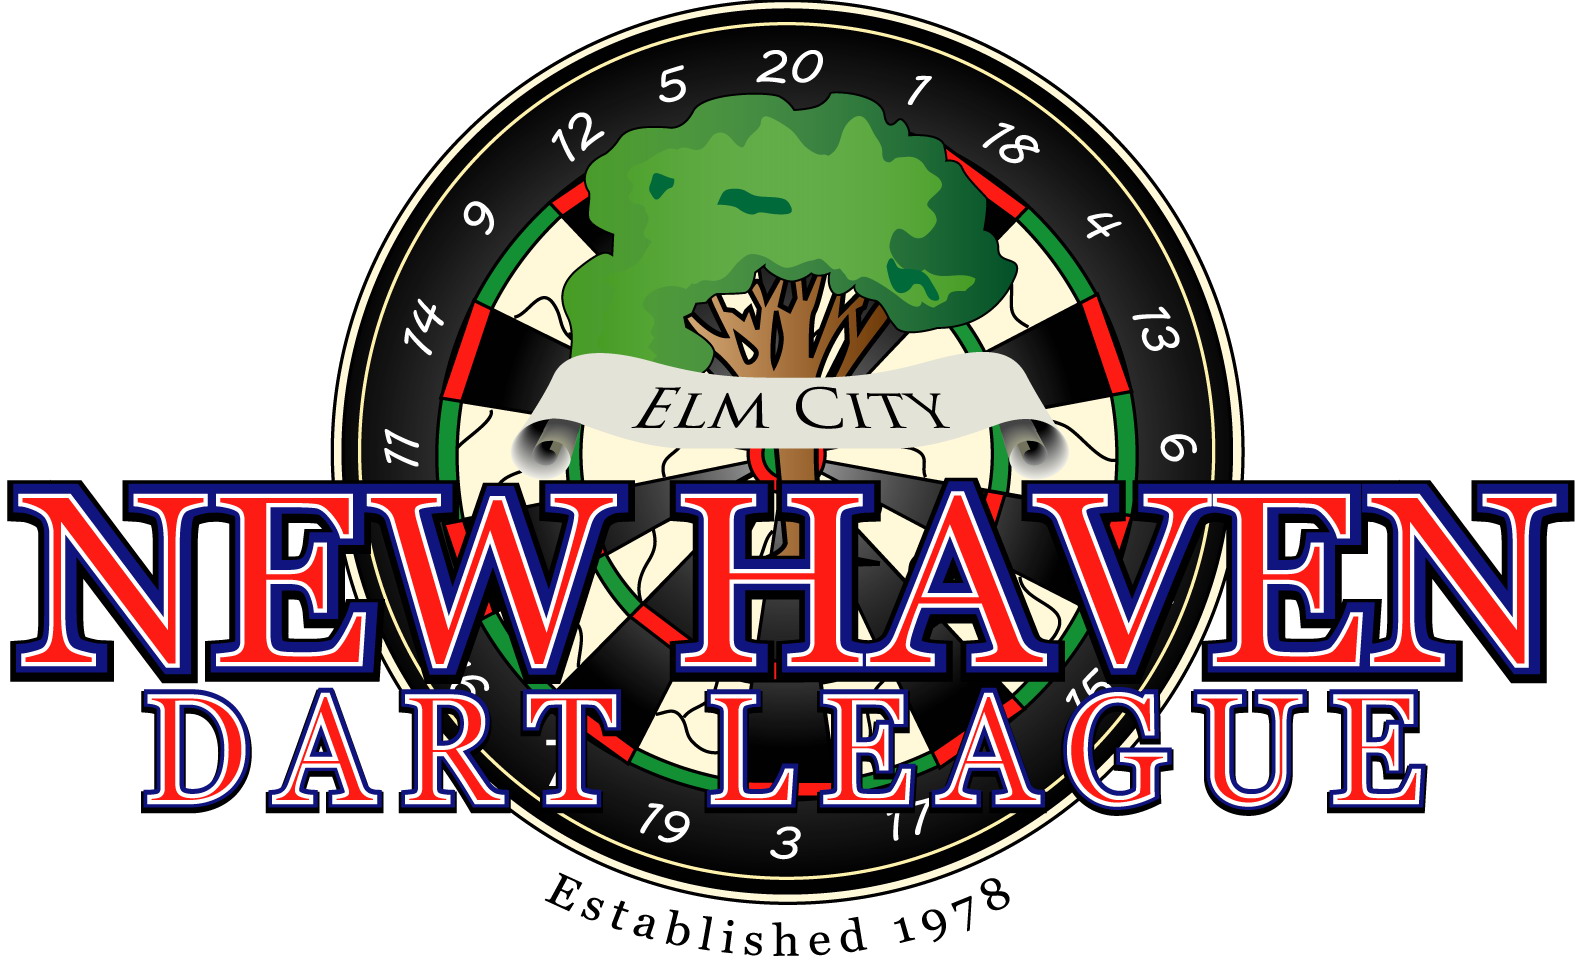 New Haven Dart League logo